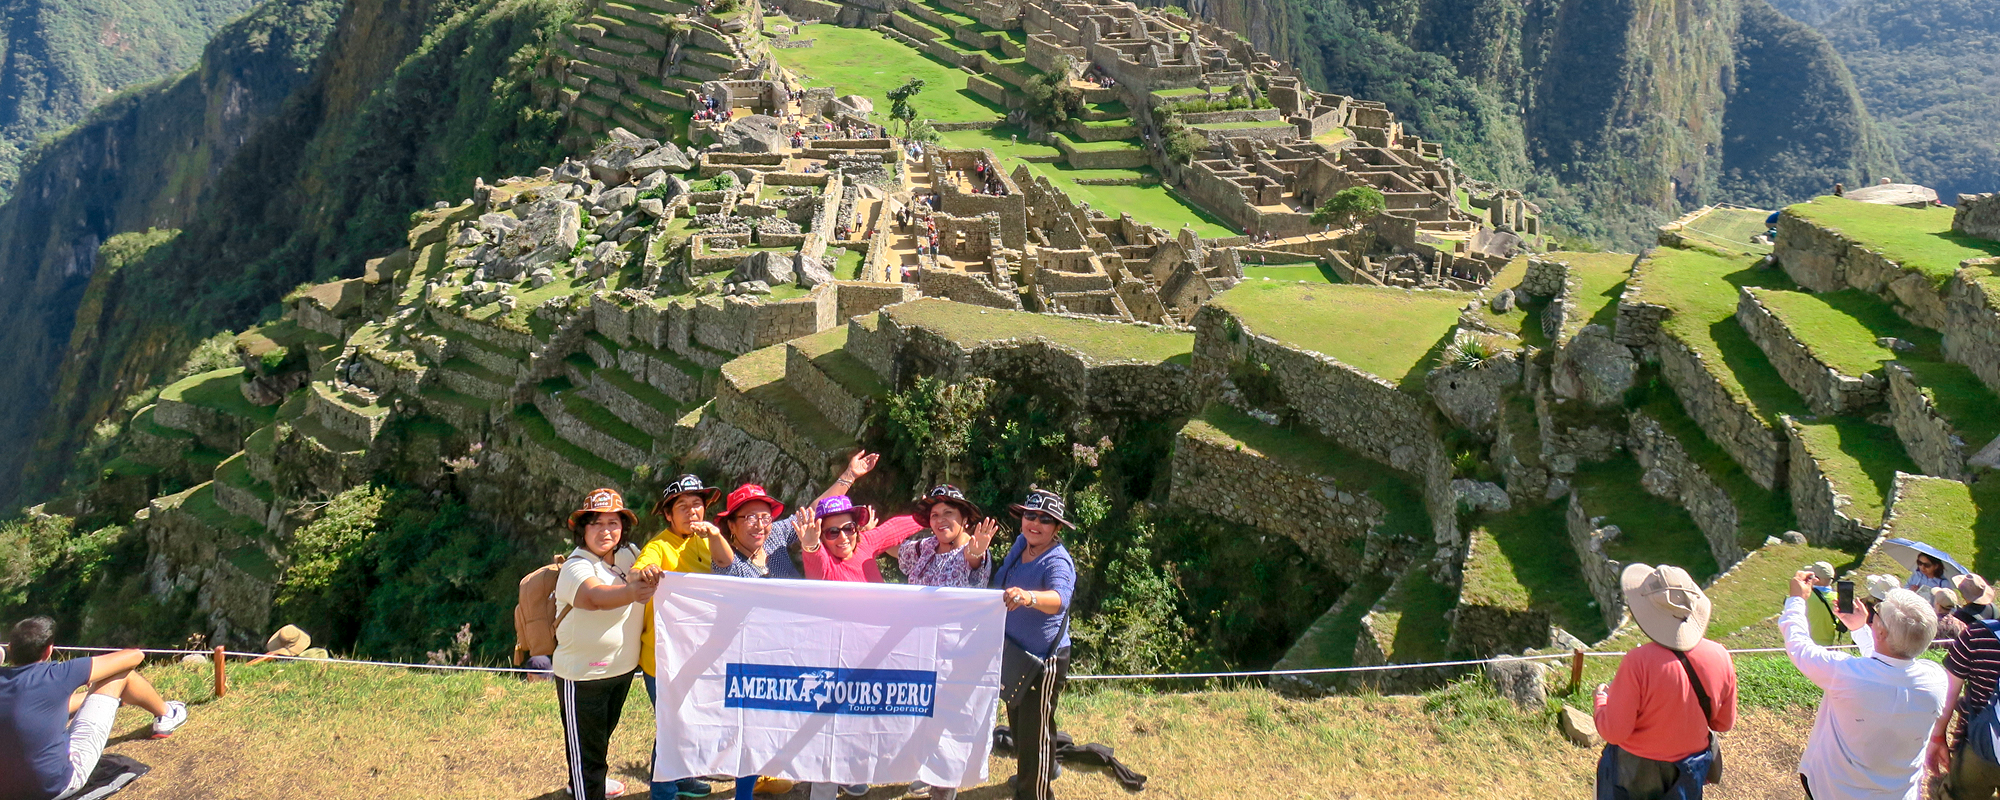 Amerika Tours Peru